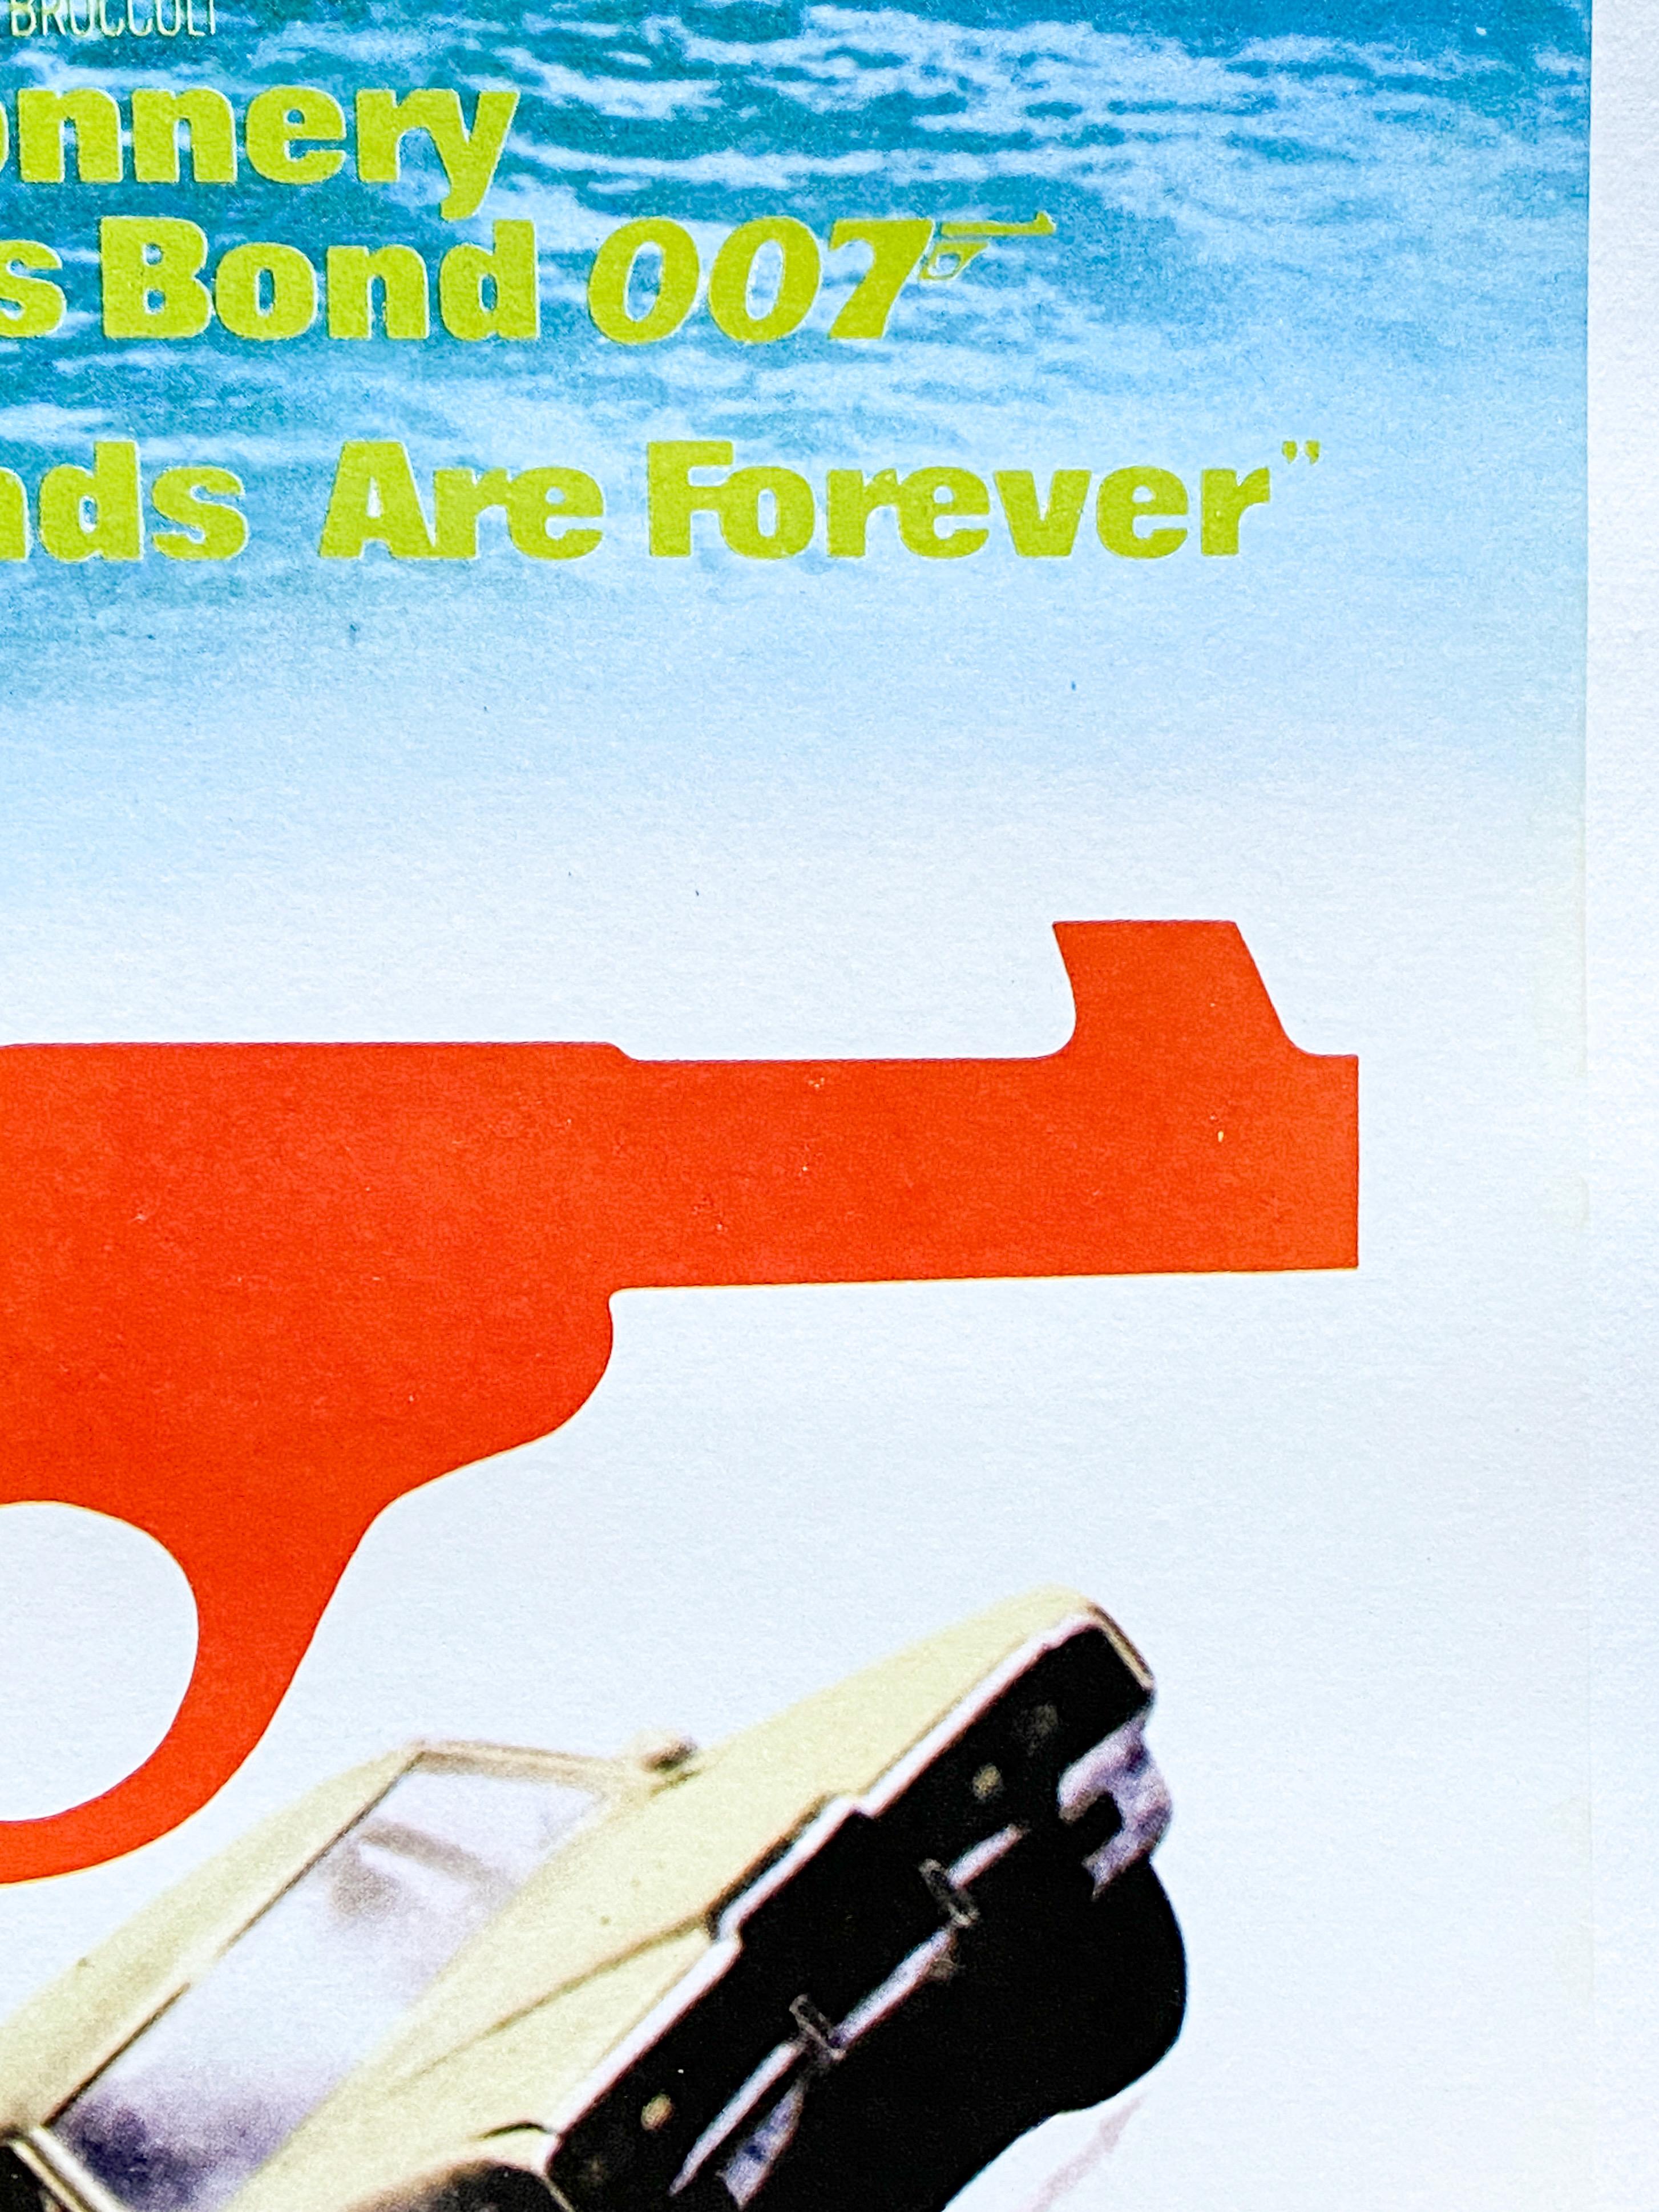 James Bond 'Diamonds Are Forever' Original Vintage Japanese Movie Poster, 1971 For Sale 7